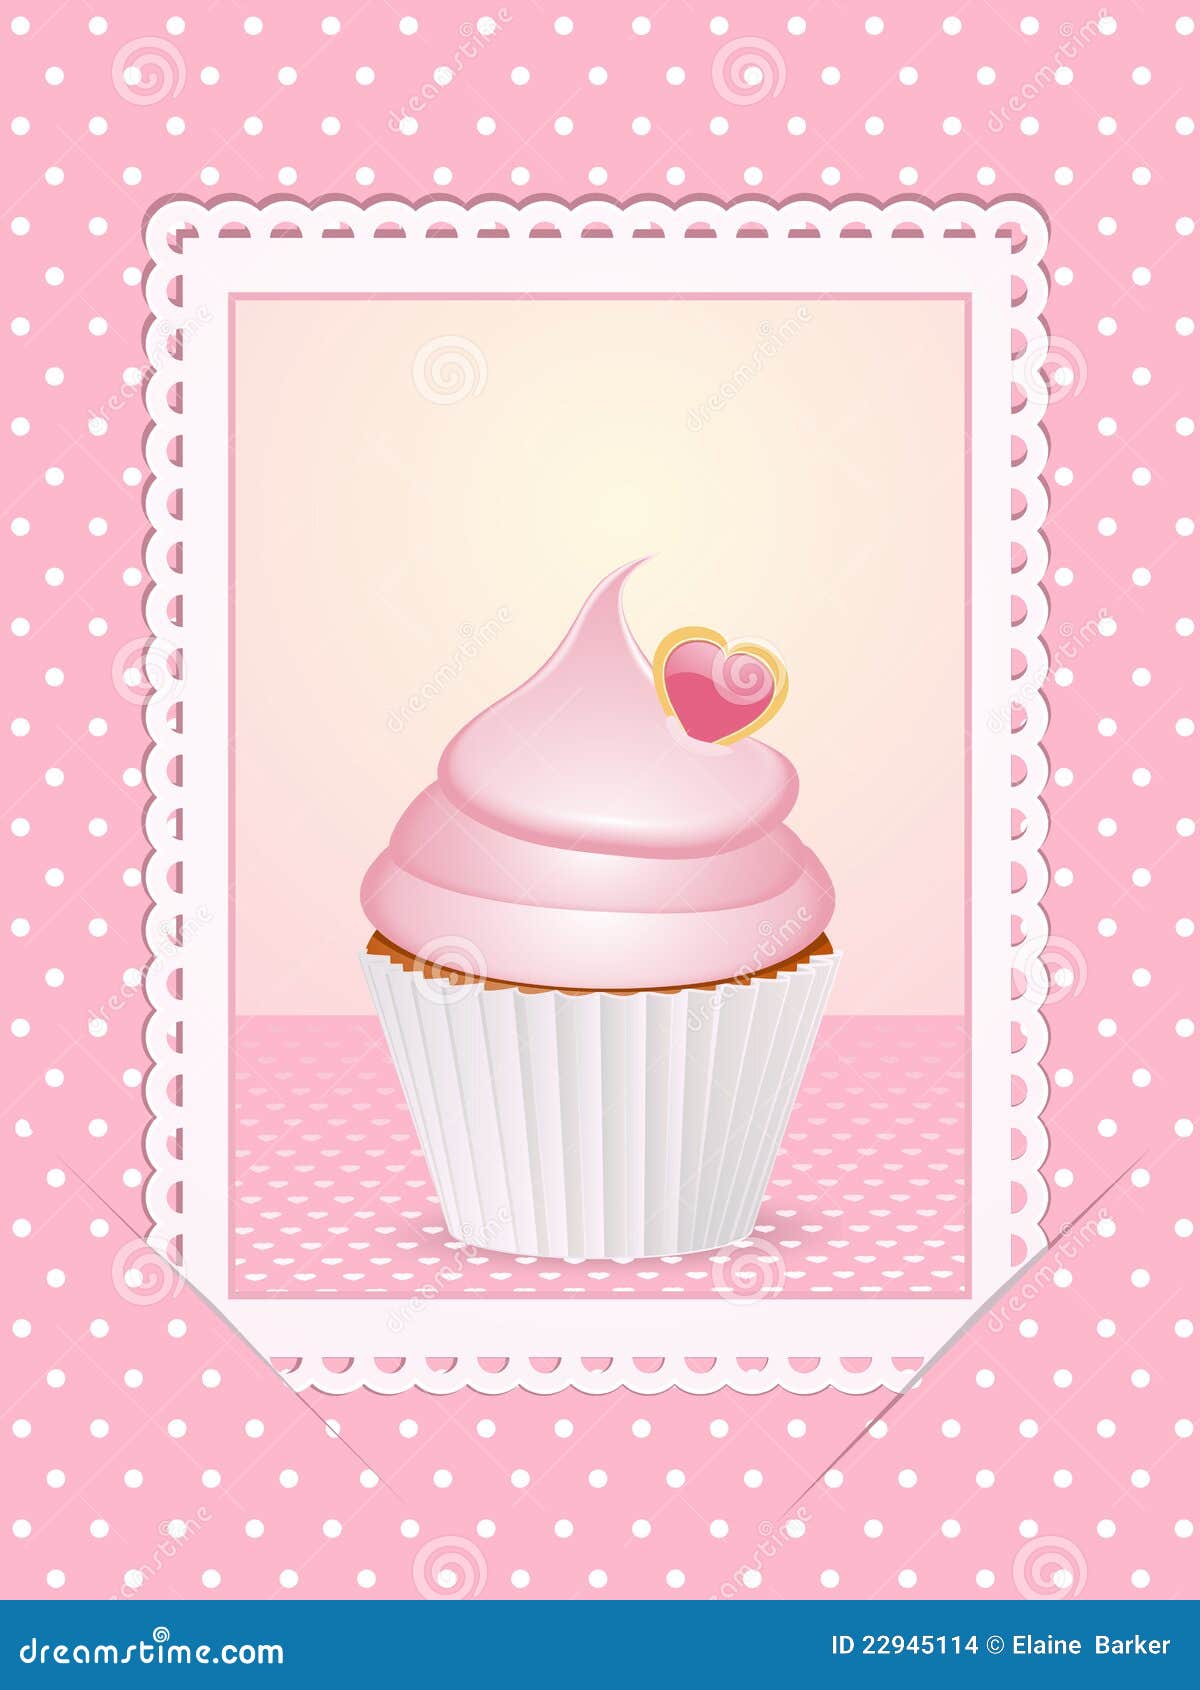 Images  Background Vintage Pink background Cupcake  Image: vintage cupcake 22945114 Stock